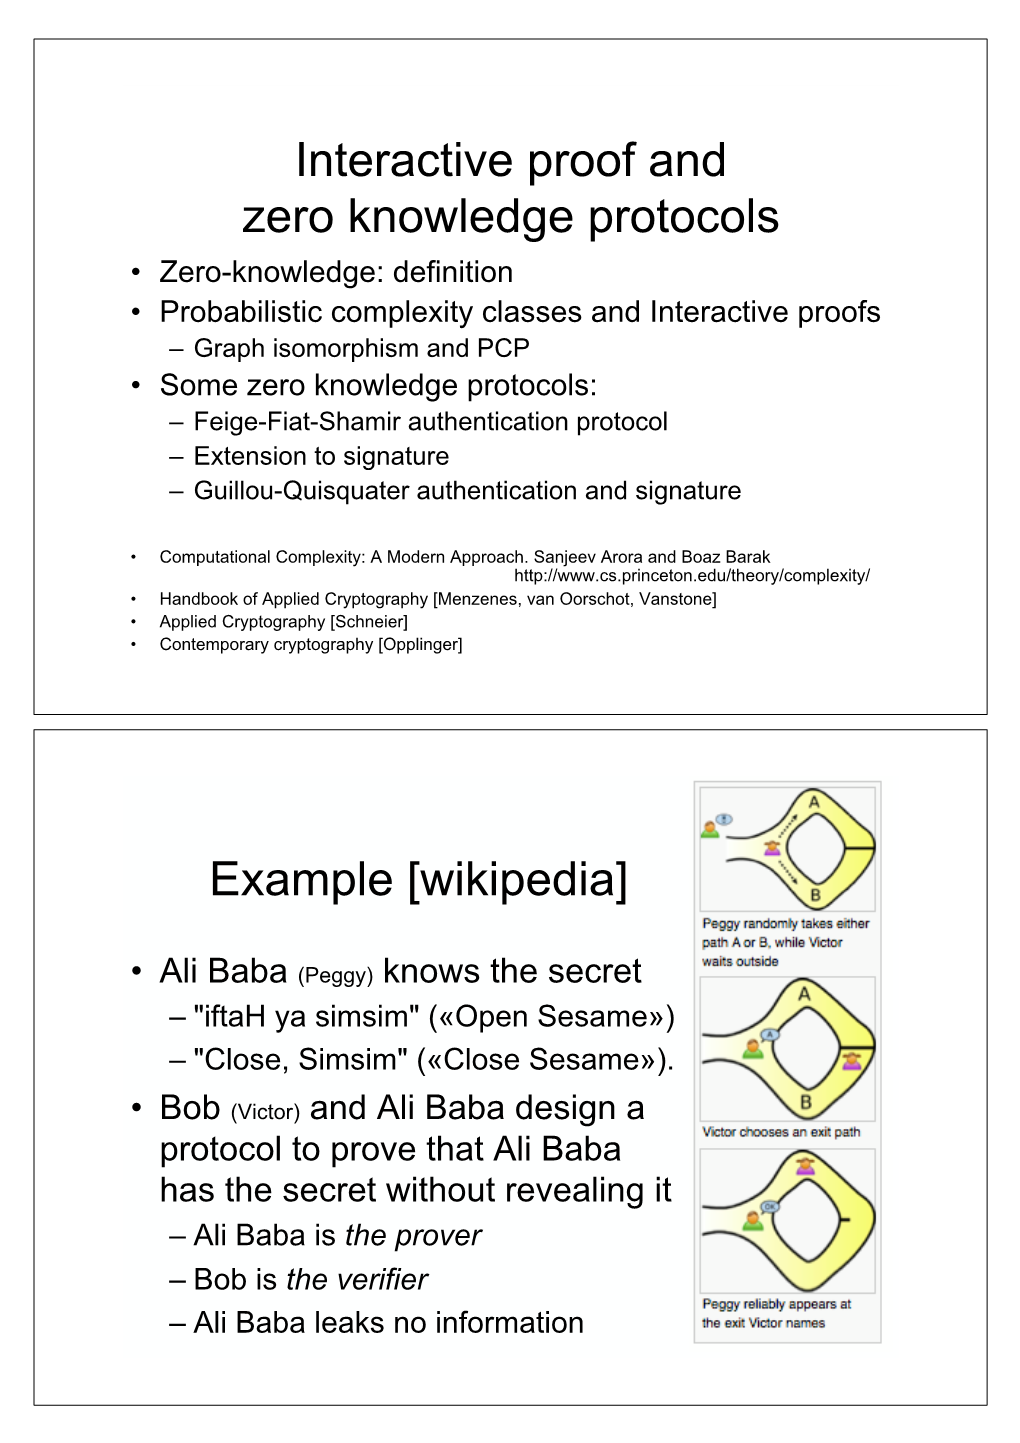 Interactive Proofs and Zero Knowledge